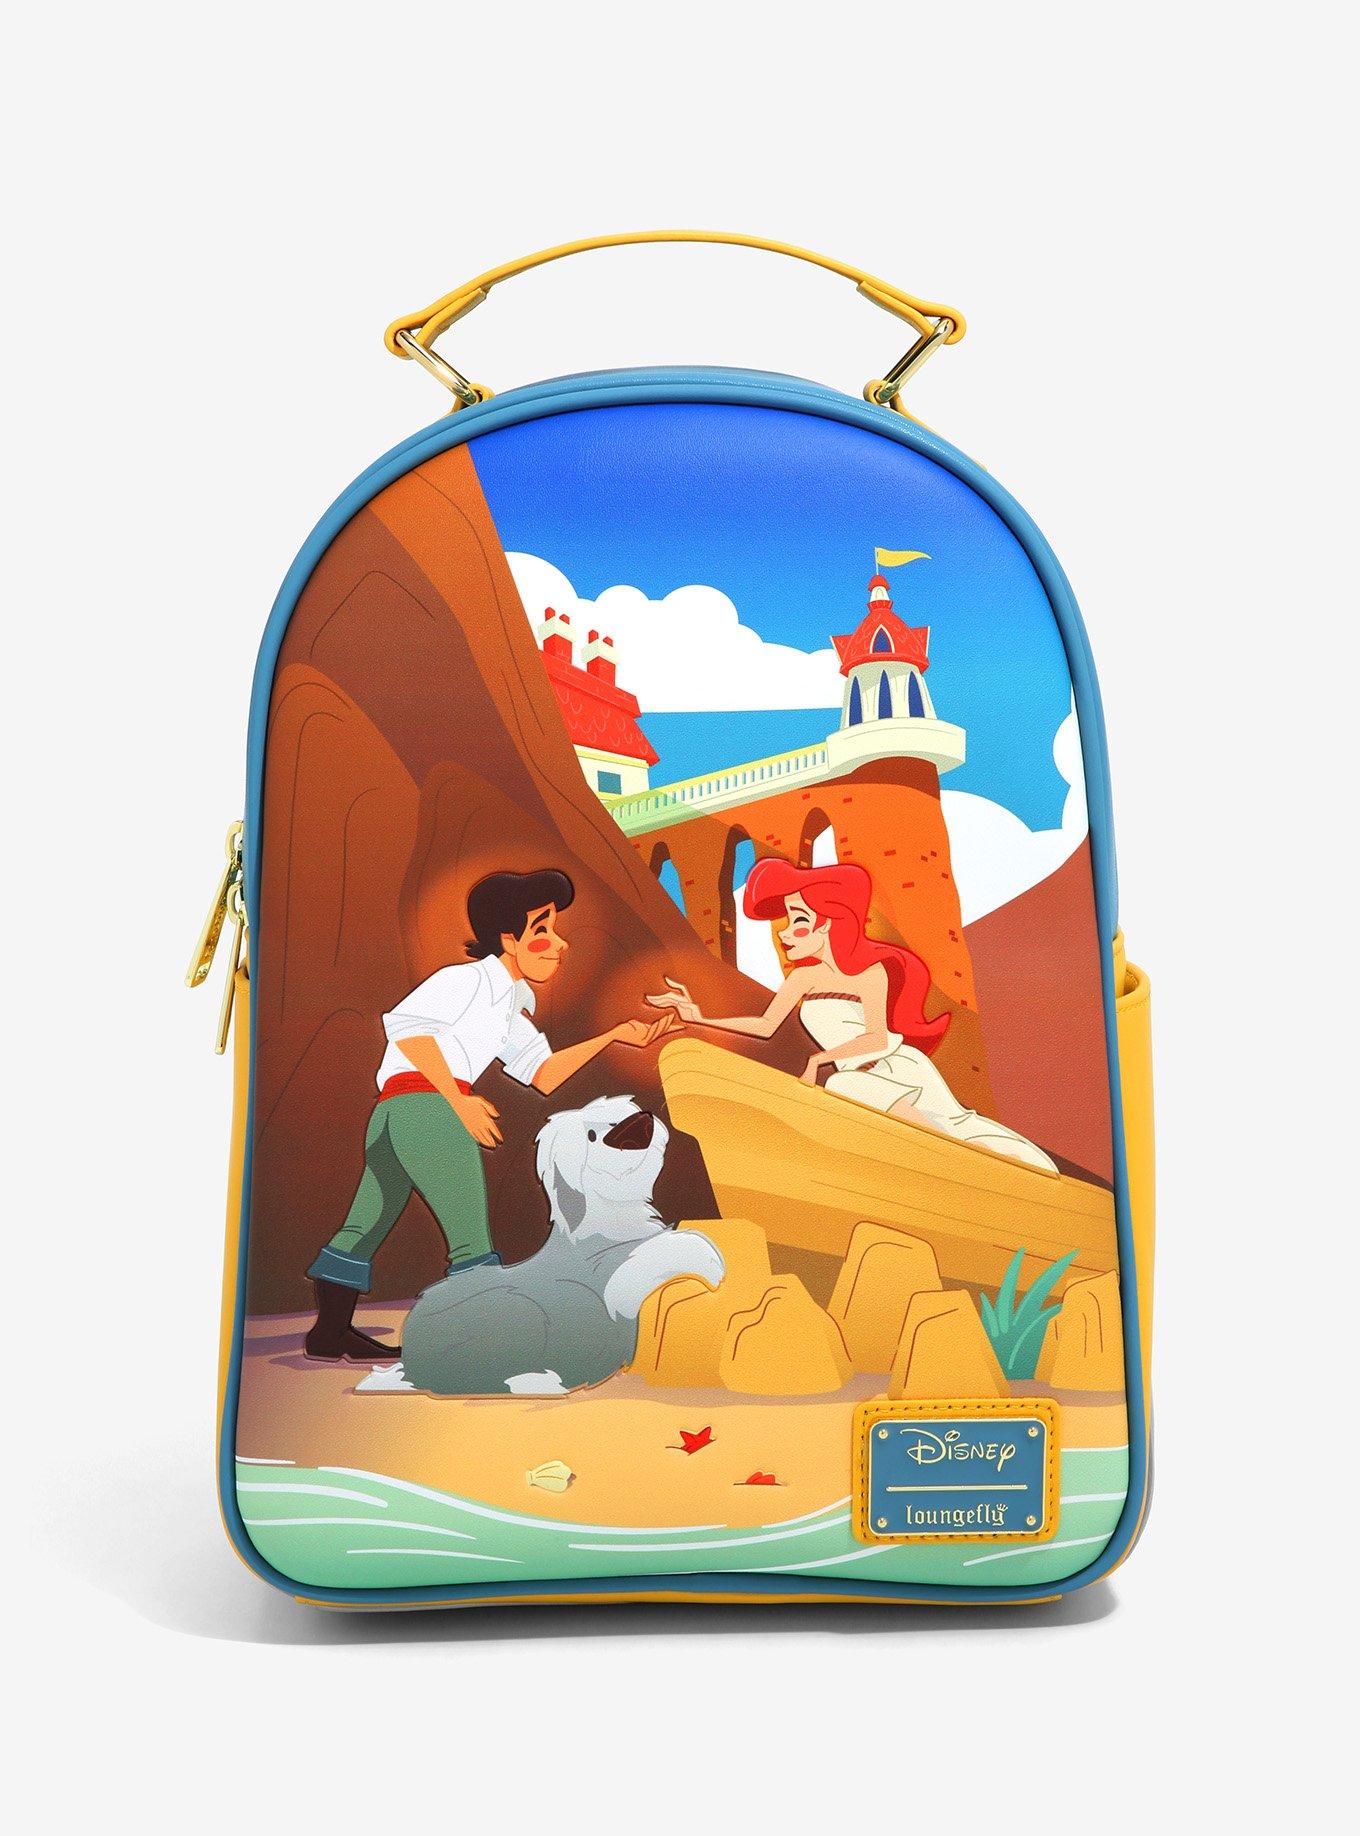 Loungefly Disney The Little Mermaid Ariel & Shells Mini Backpack